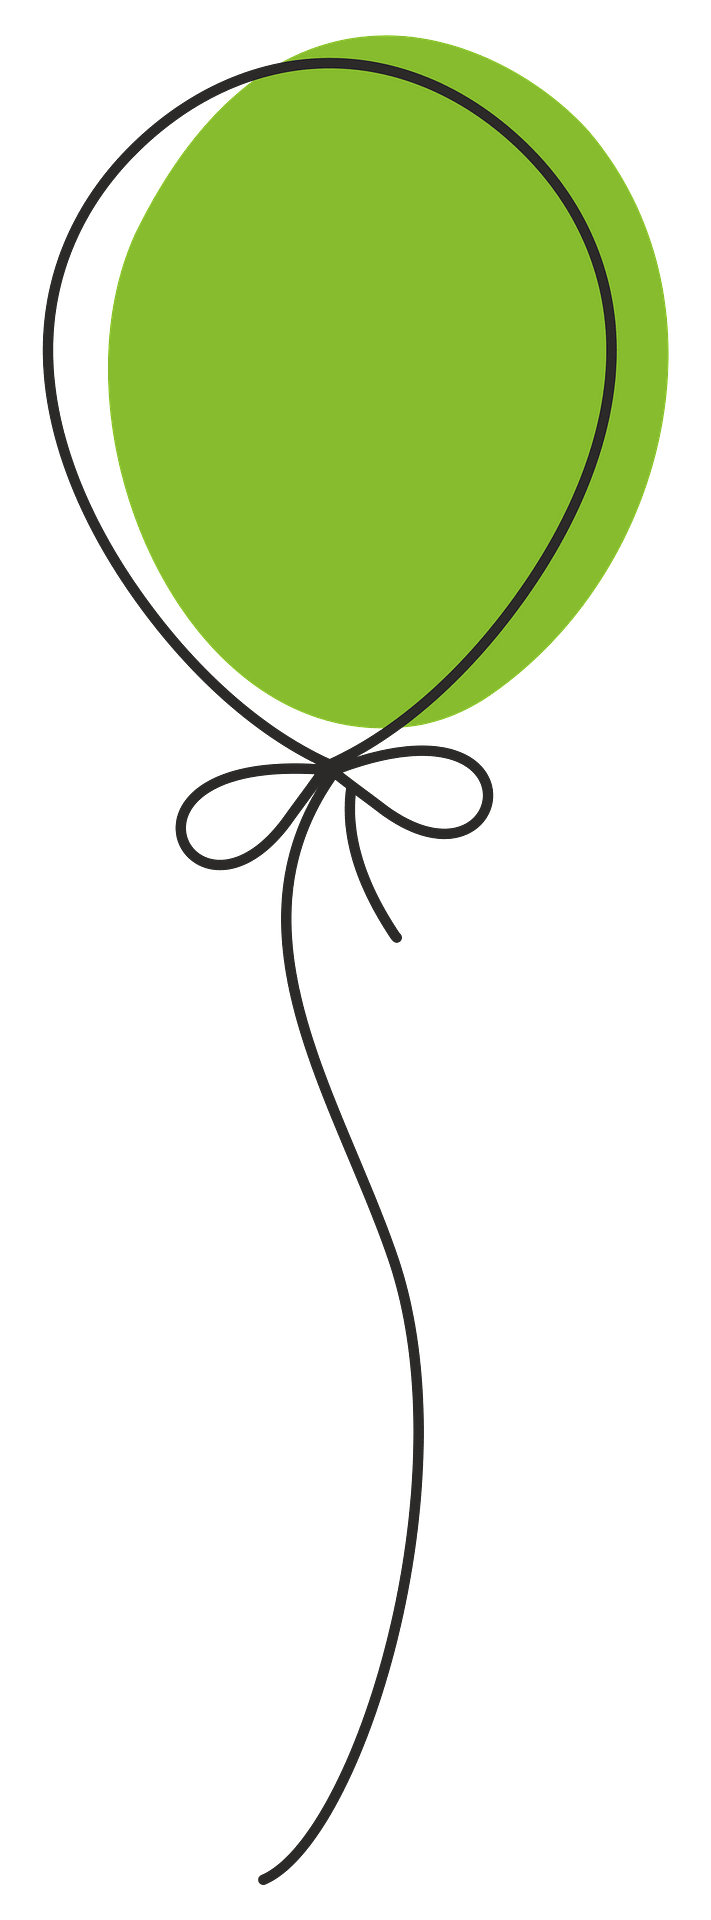 Balloon Birthday Green Free Download Image PNG Image